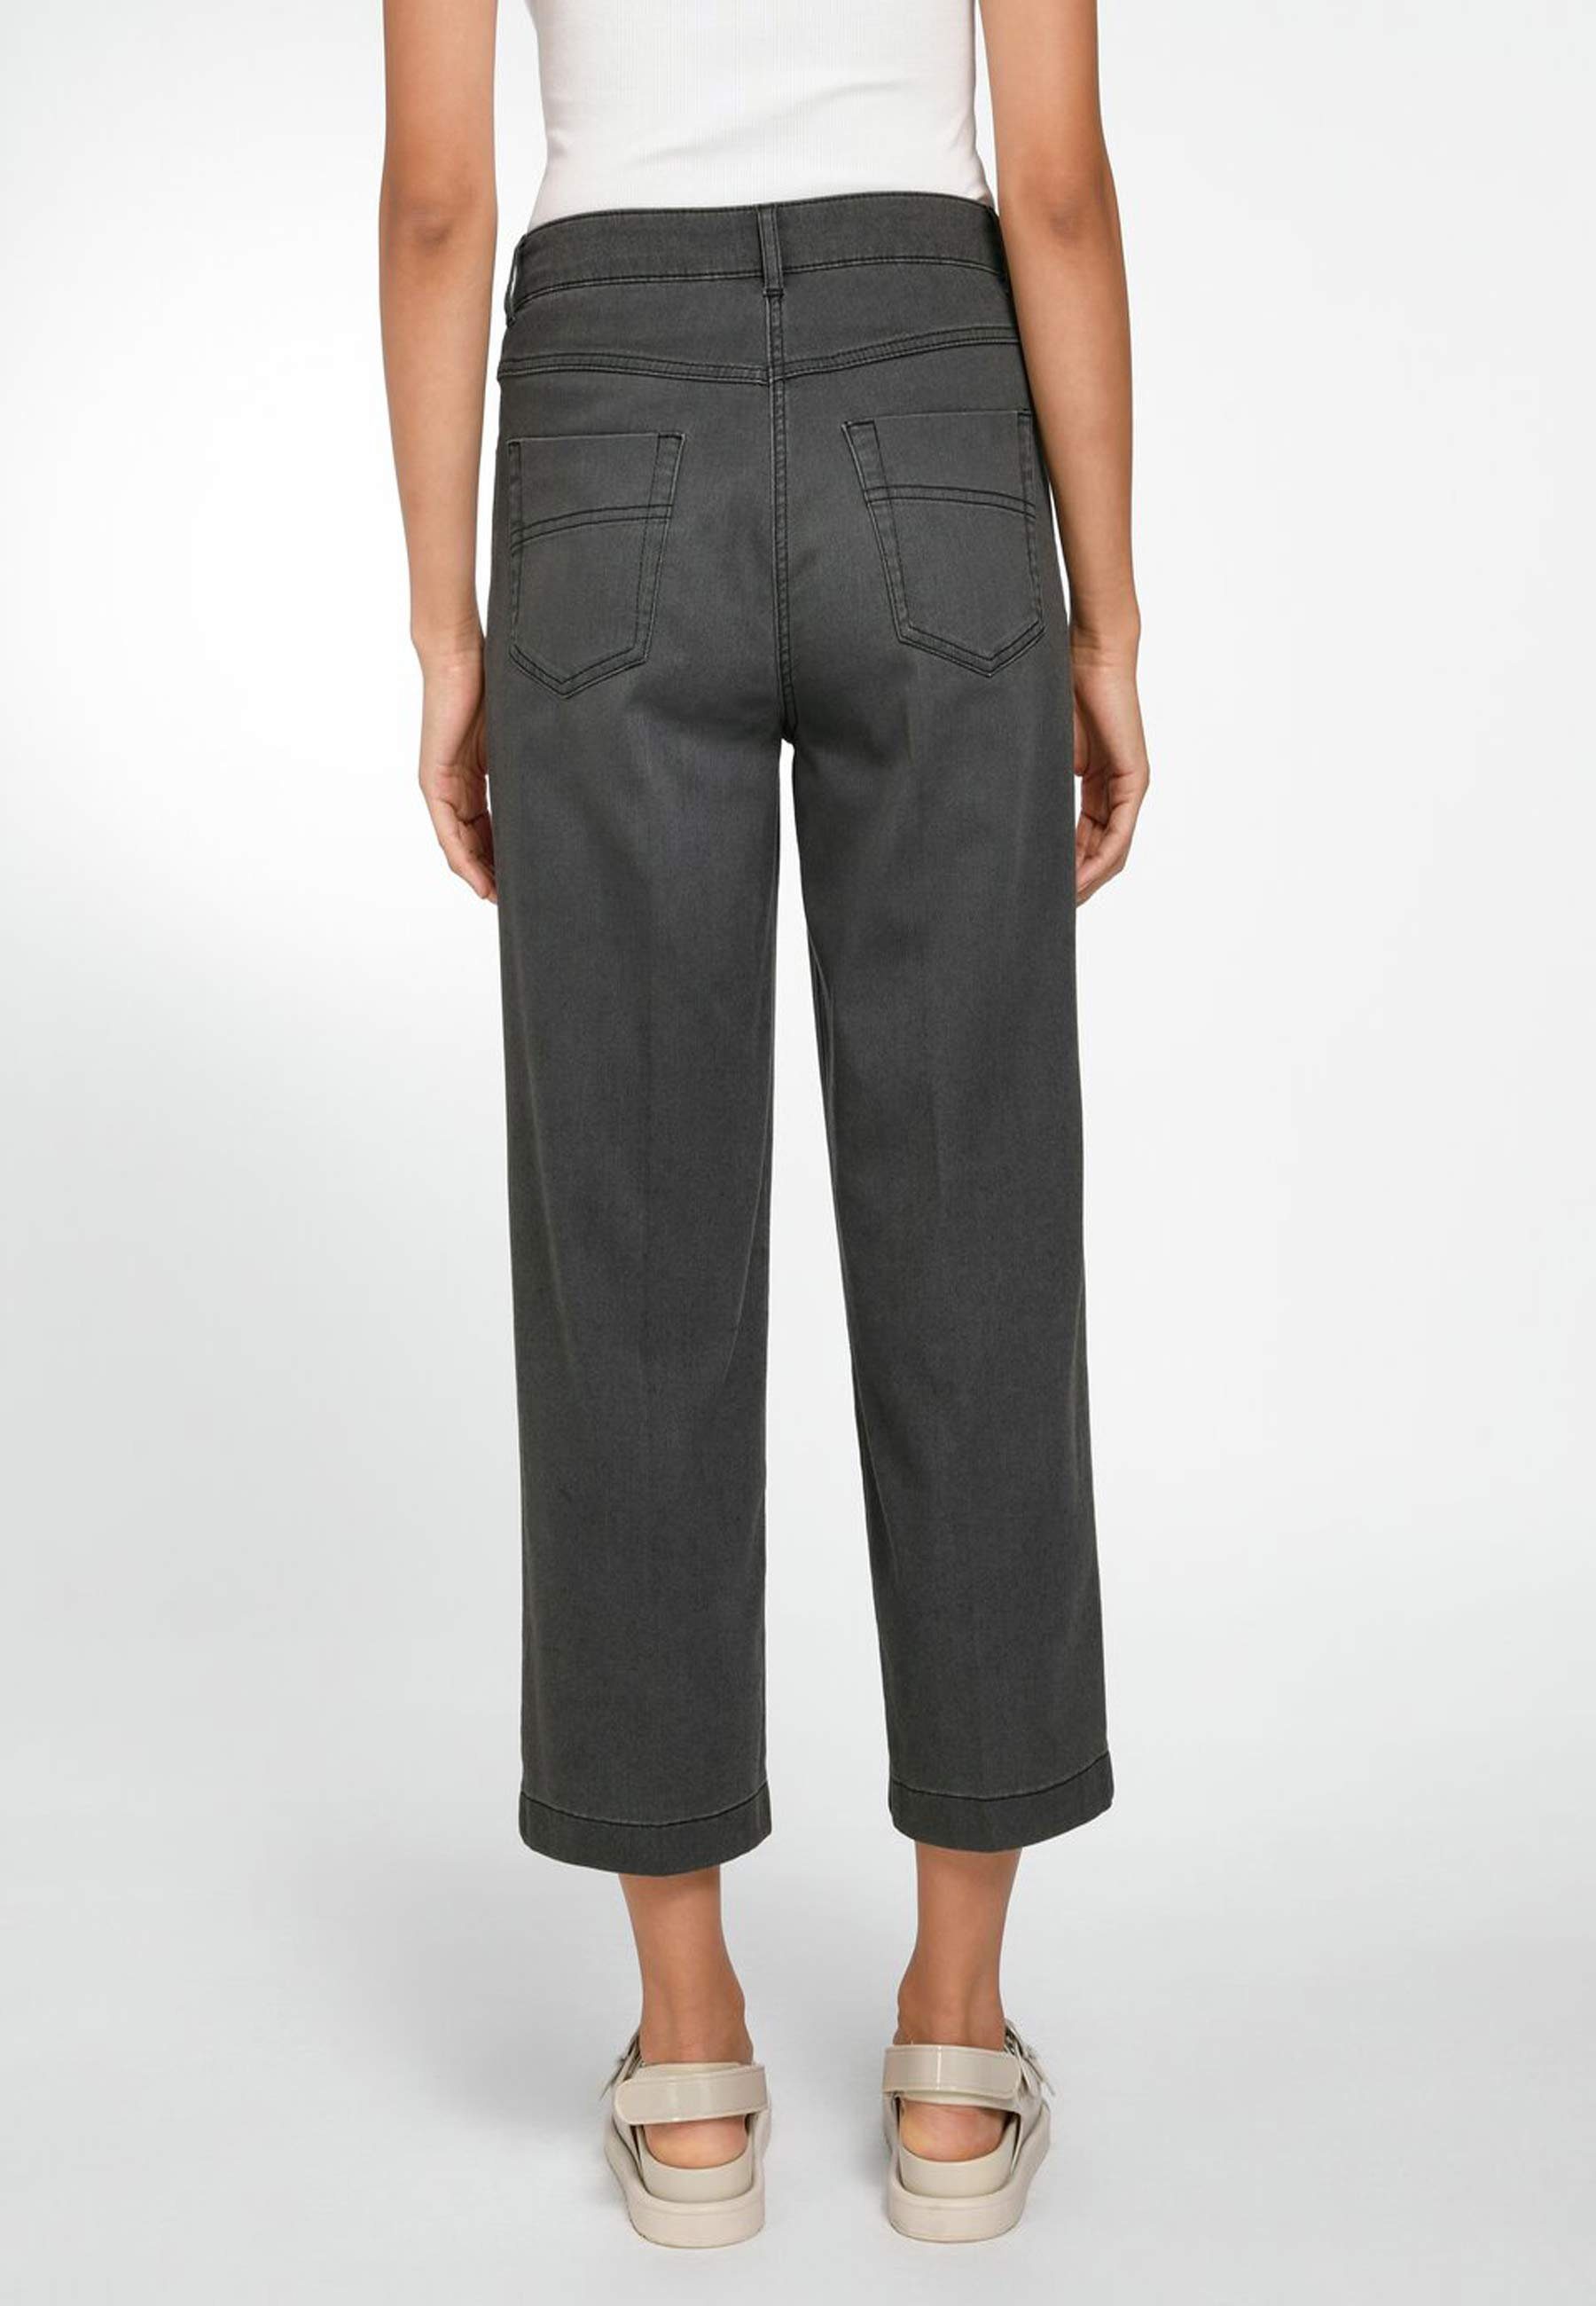 mit Basler Cotton klassischem Design hellgrau 5-Pocket-Jeans